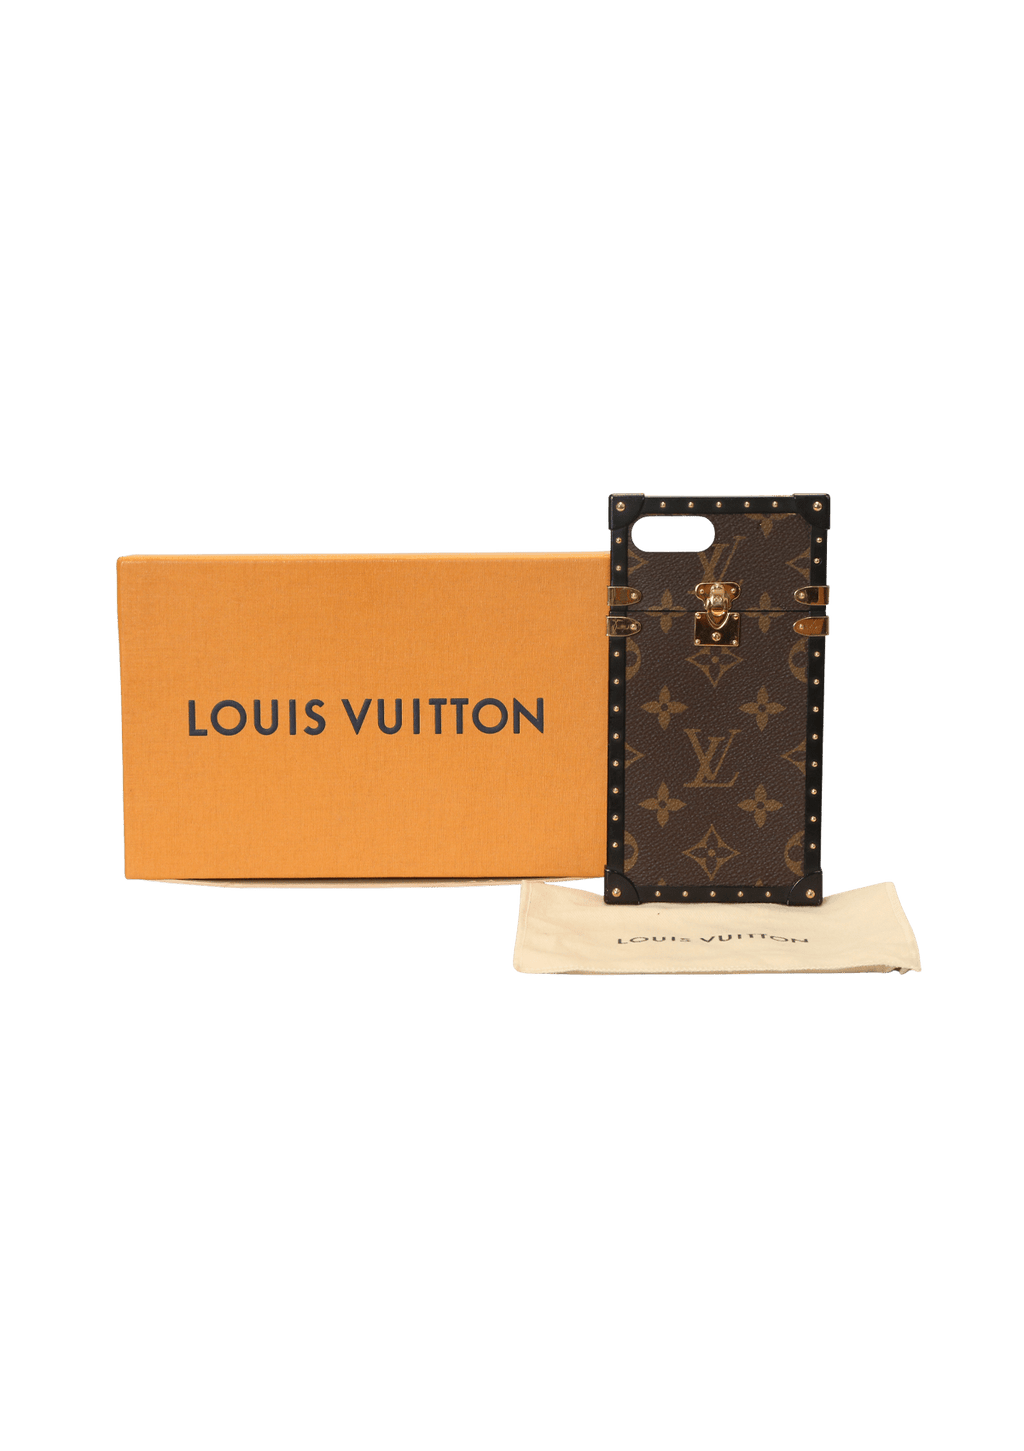 LOUIS VUITTON Eye-Trunk Monogram IPhone 7 Plus Case-US